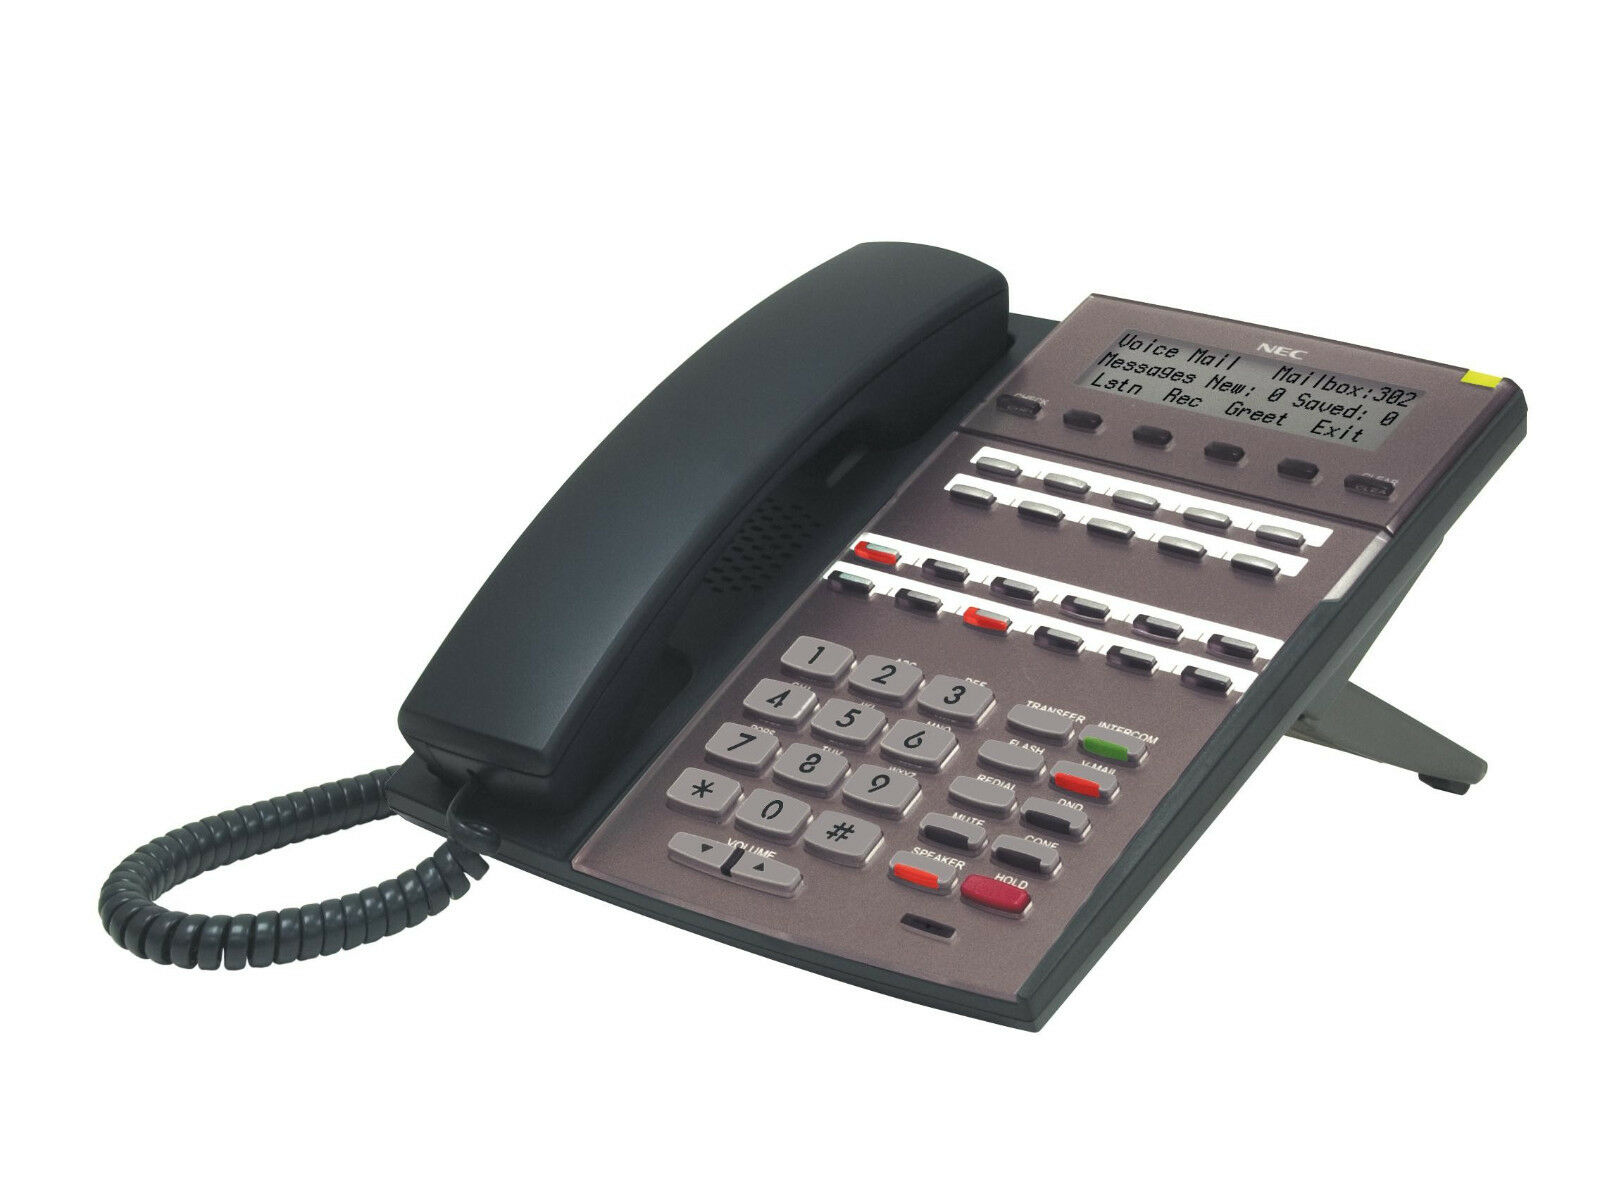 Nec 1090020 Dsx 22b Display Tel Bk Phone Dx7na-22btxh Refurbished Year Warranty